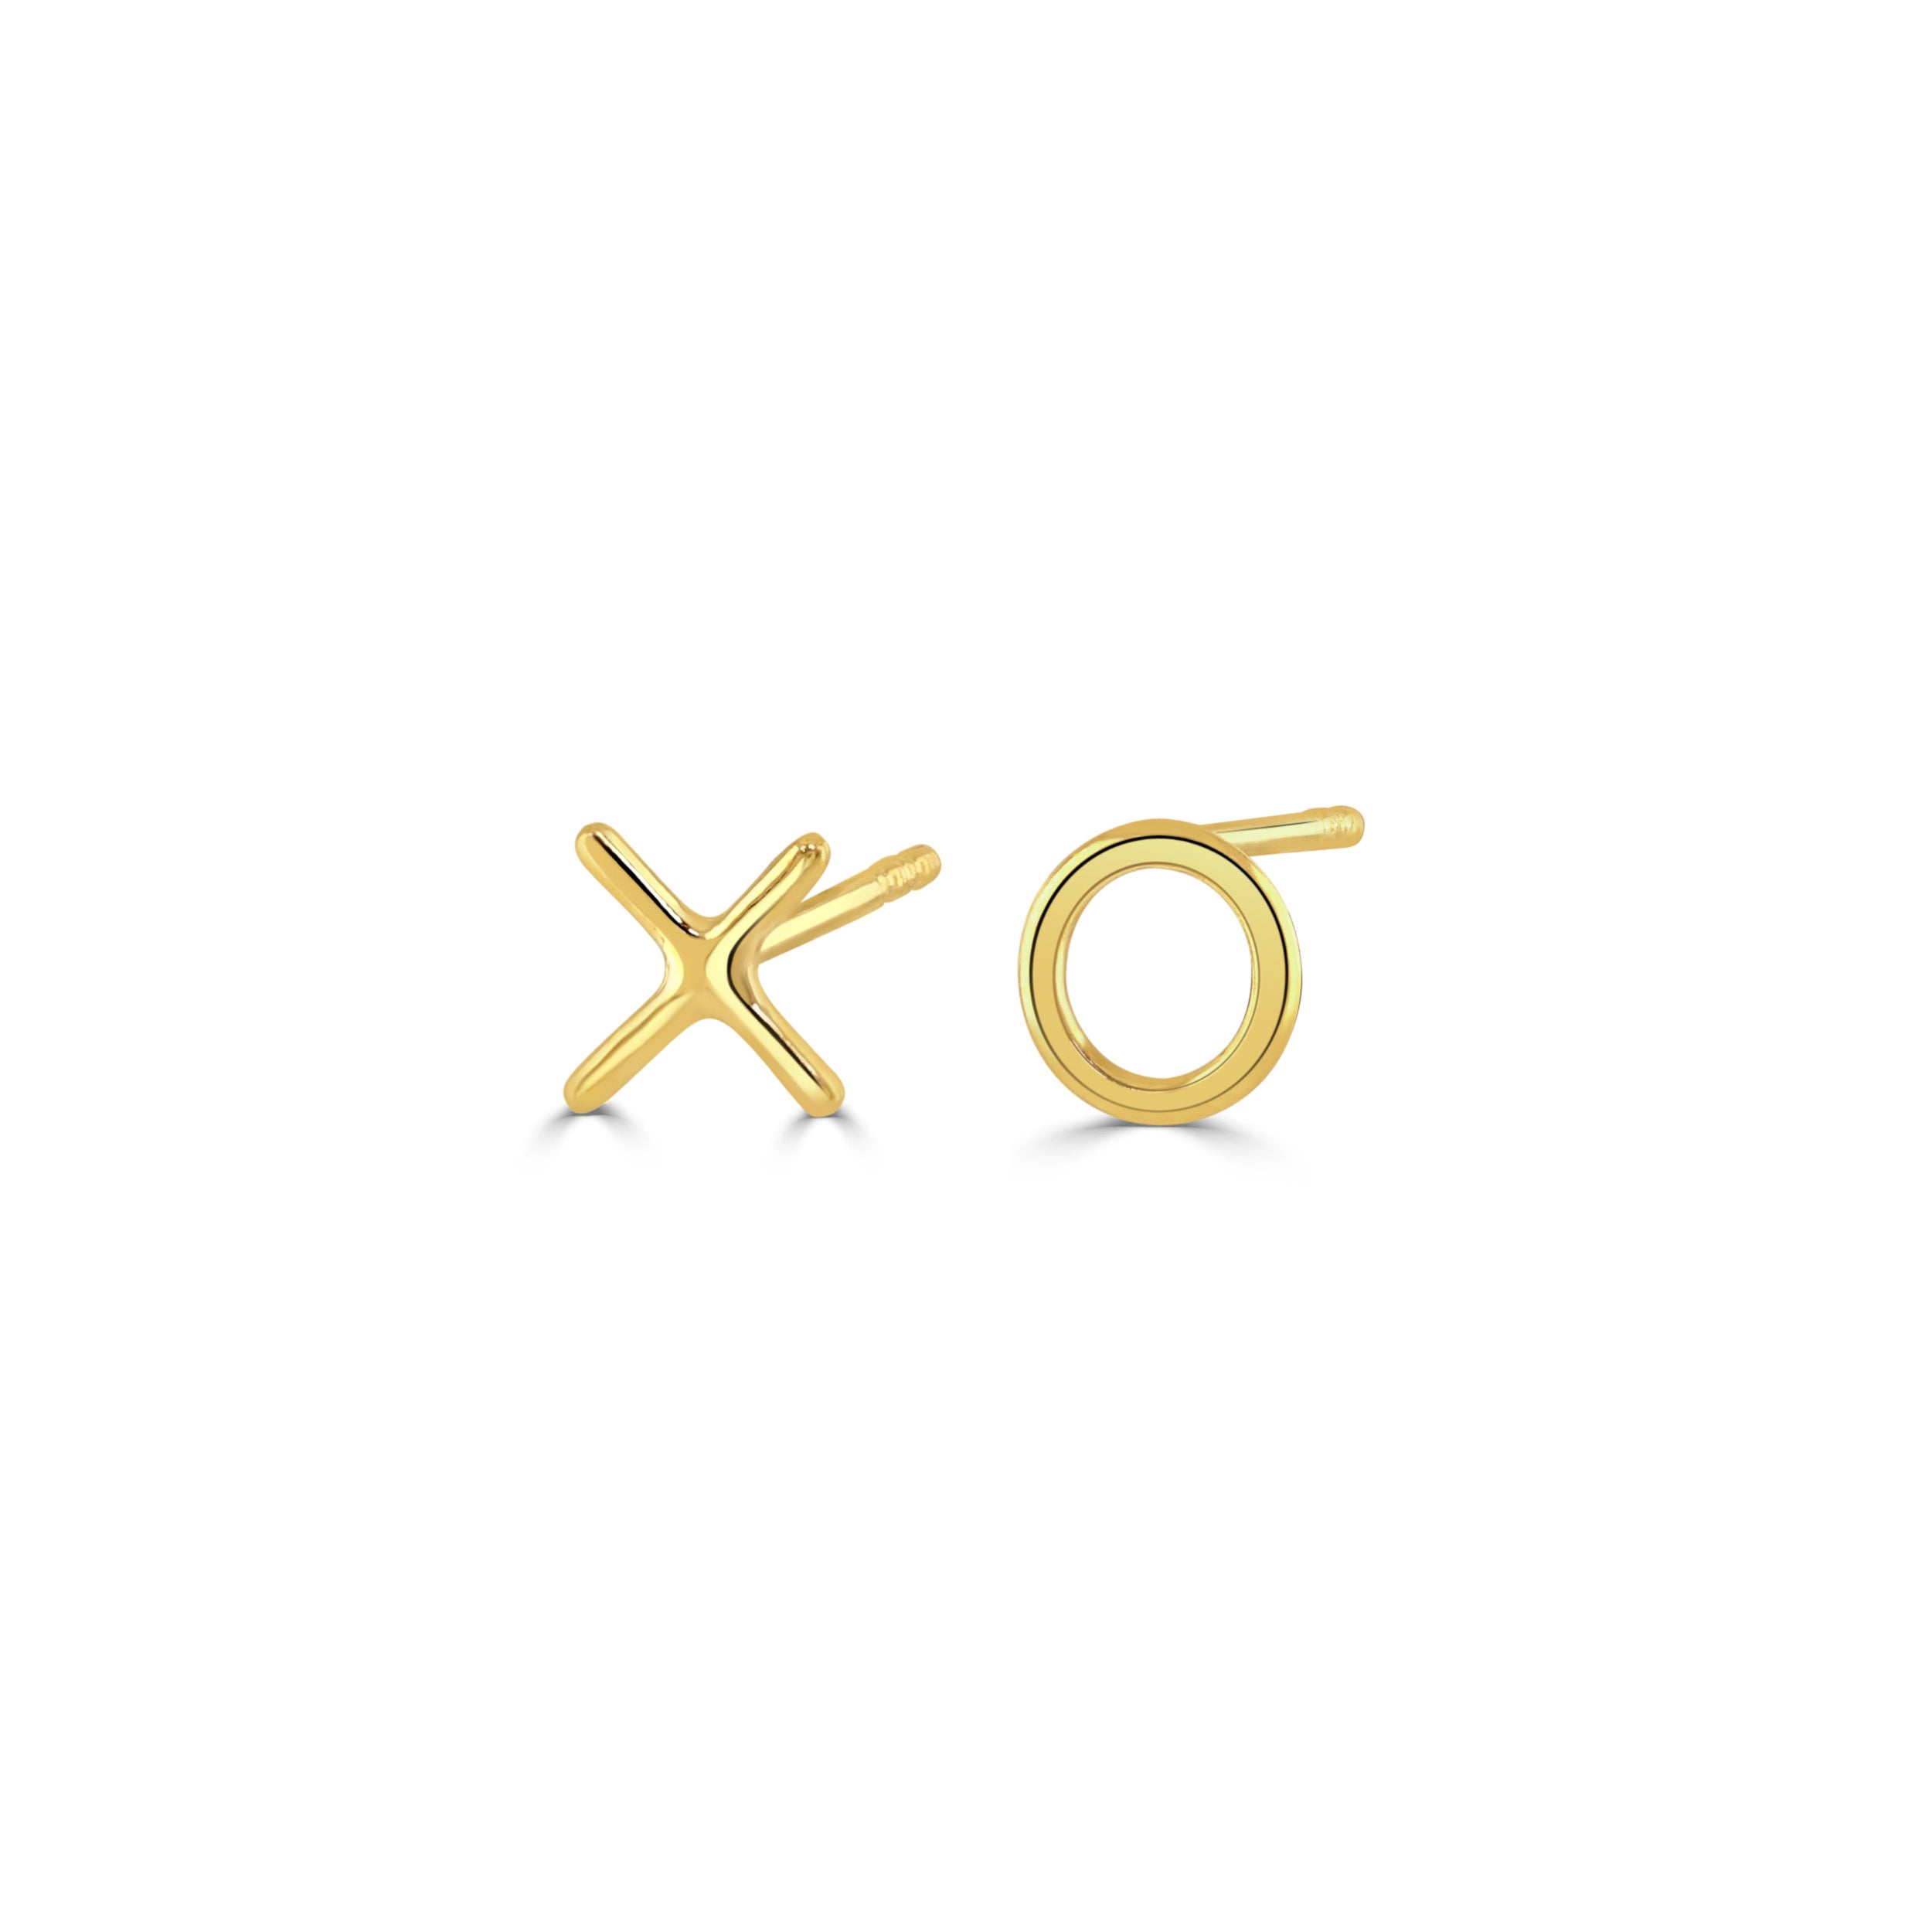 Gold X O Stud Earrings